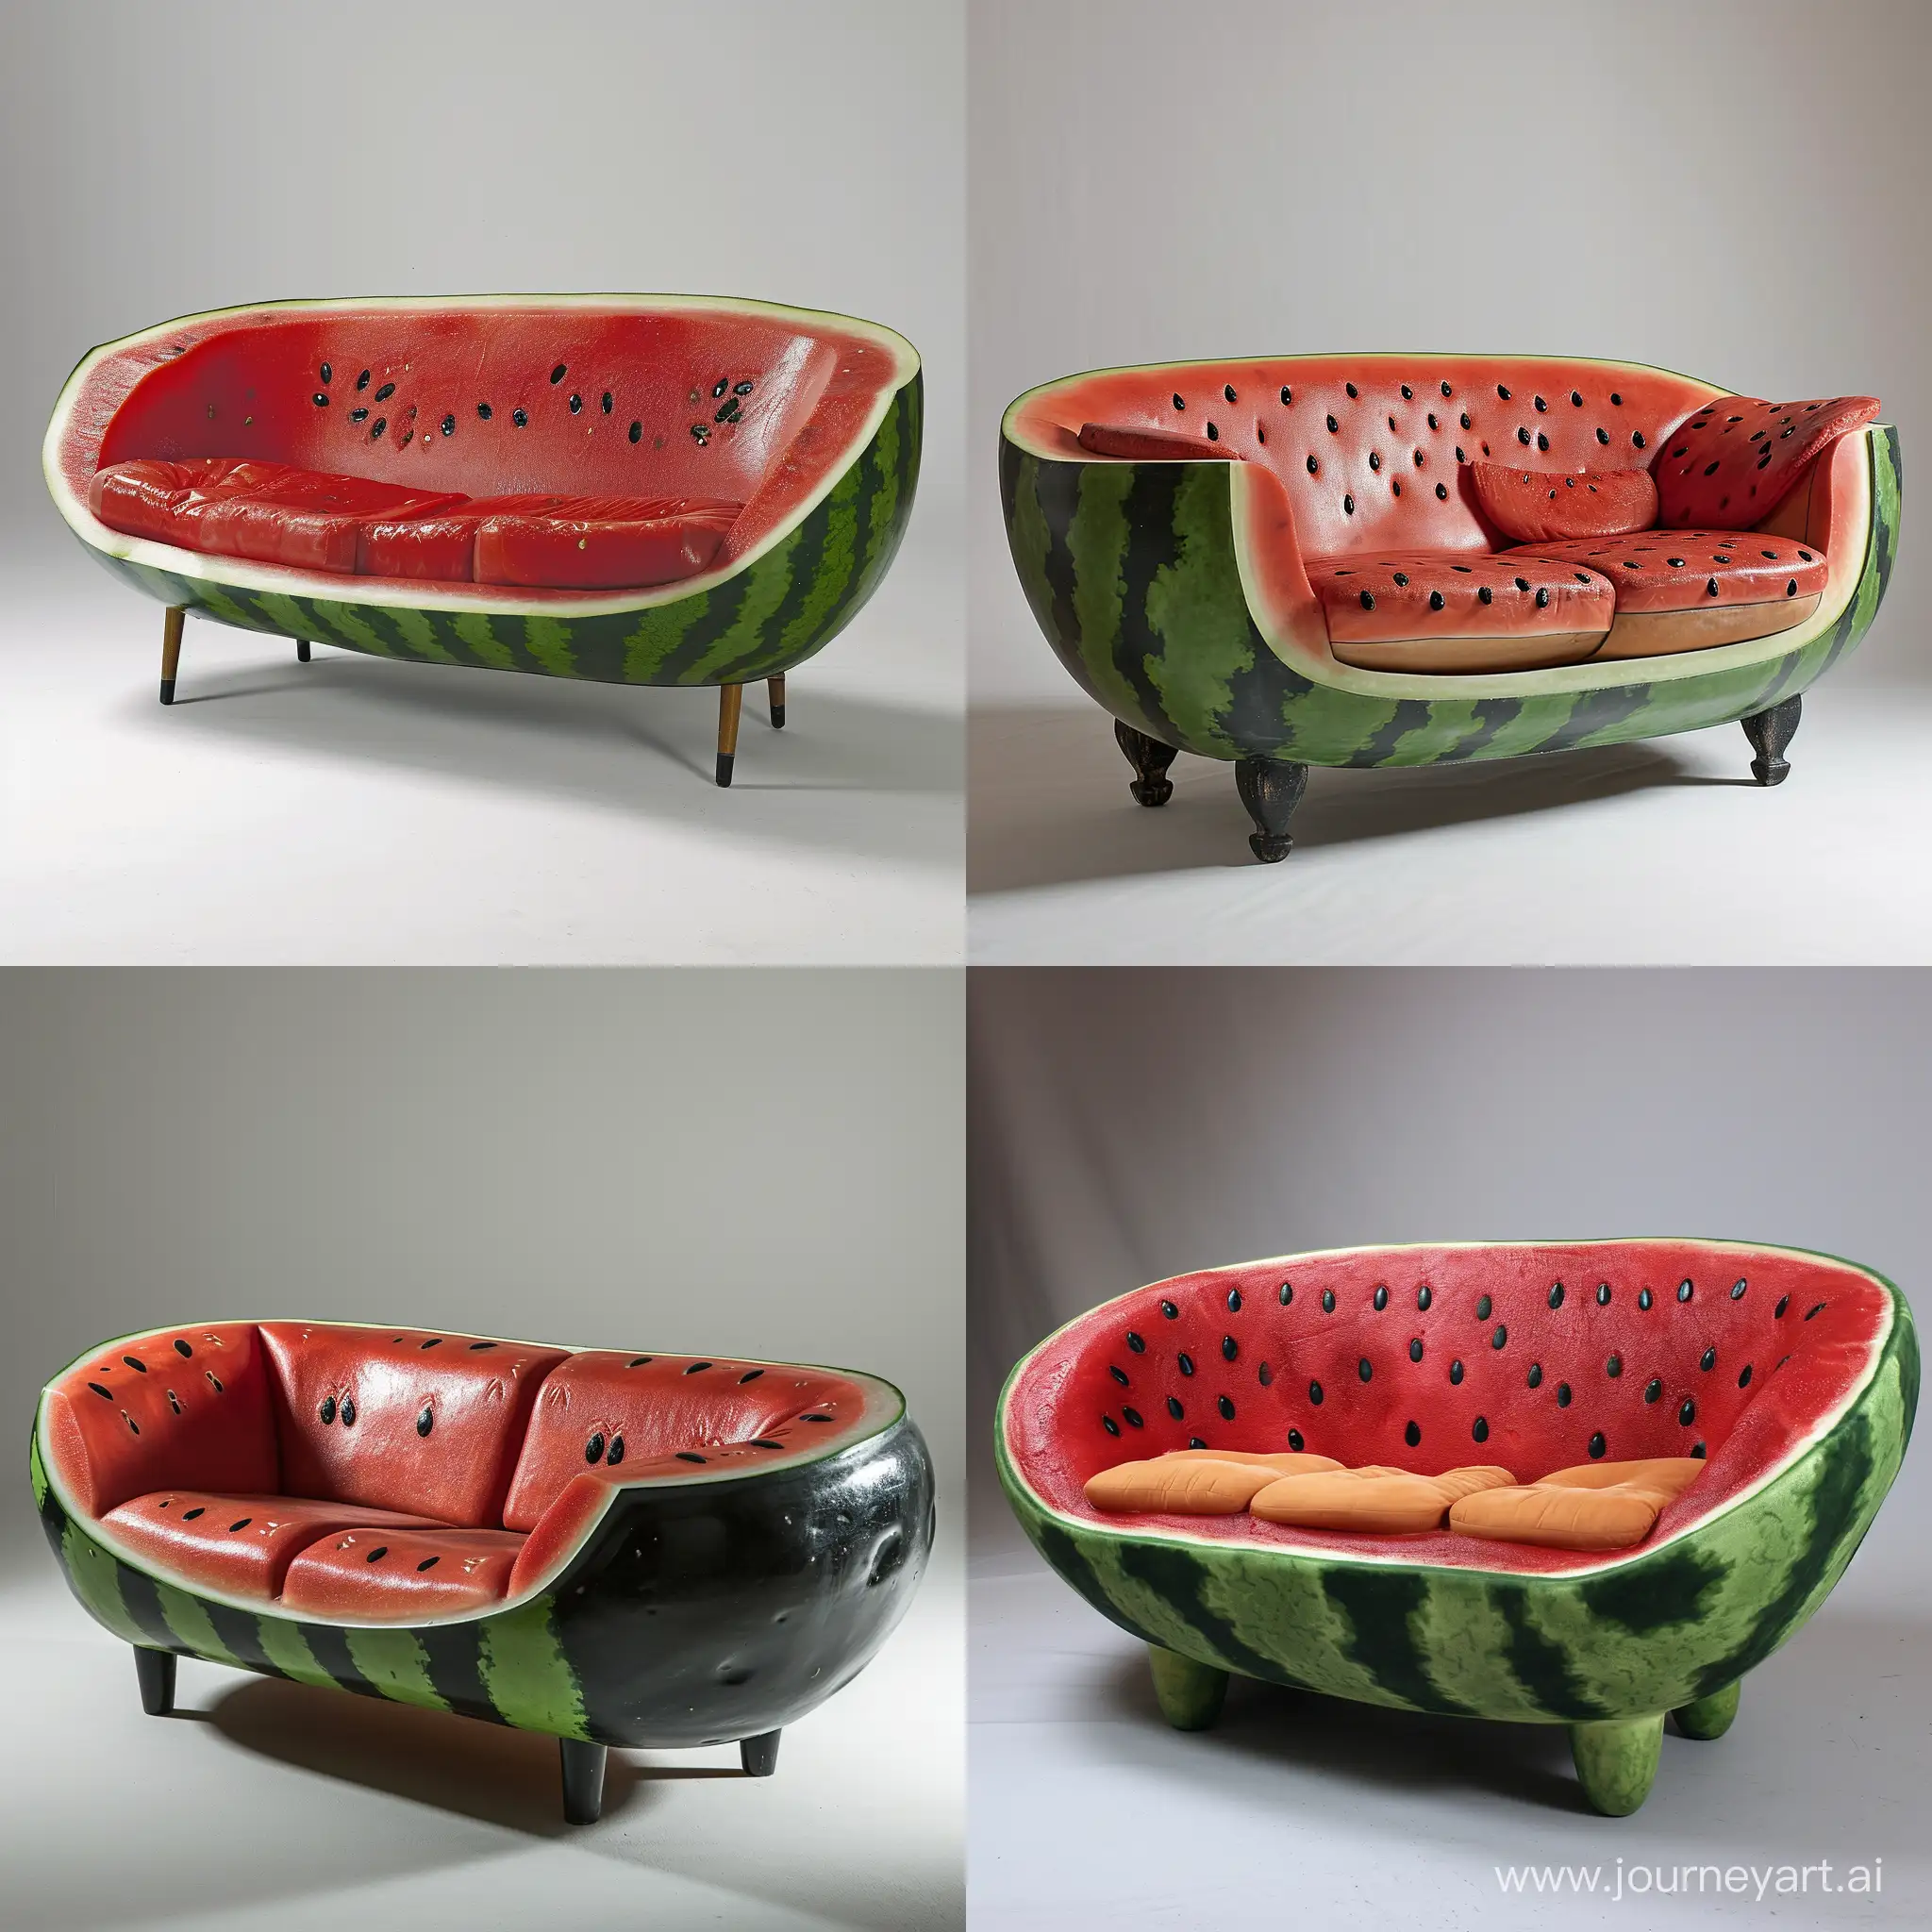 Vibrant-Watermelon-Sofa-Stylish-and-Playful-Furniture-Design